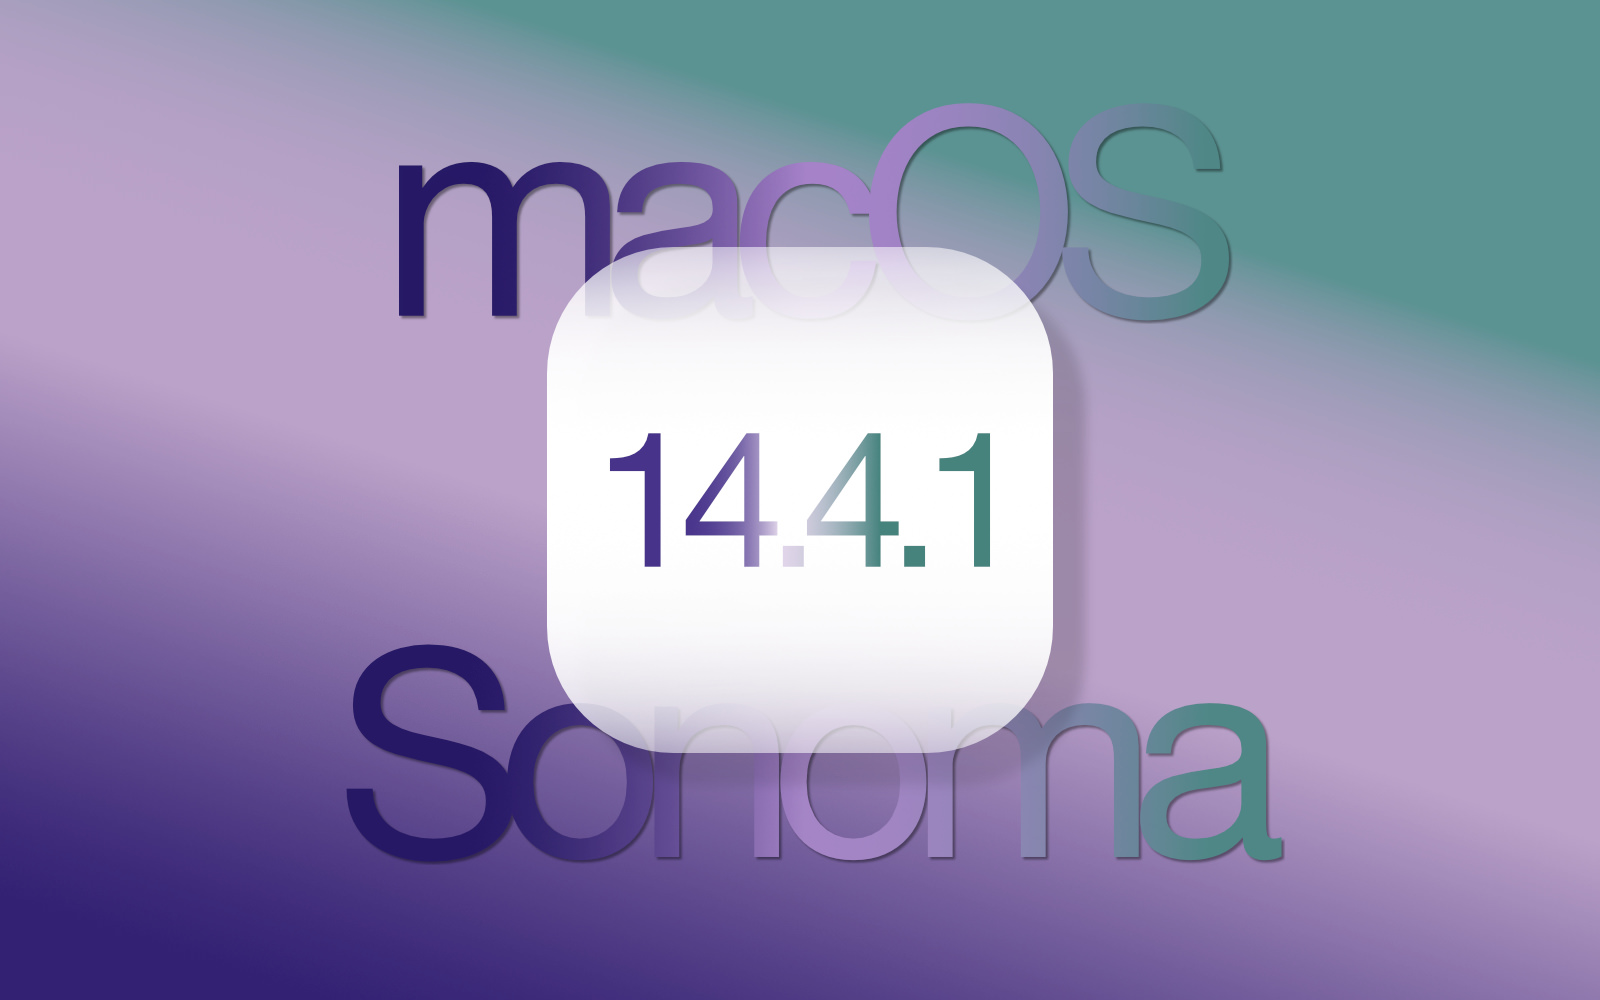 MacOS Sonoma 14 4 1 update release